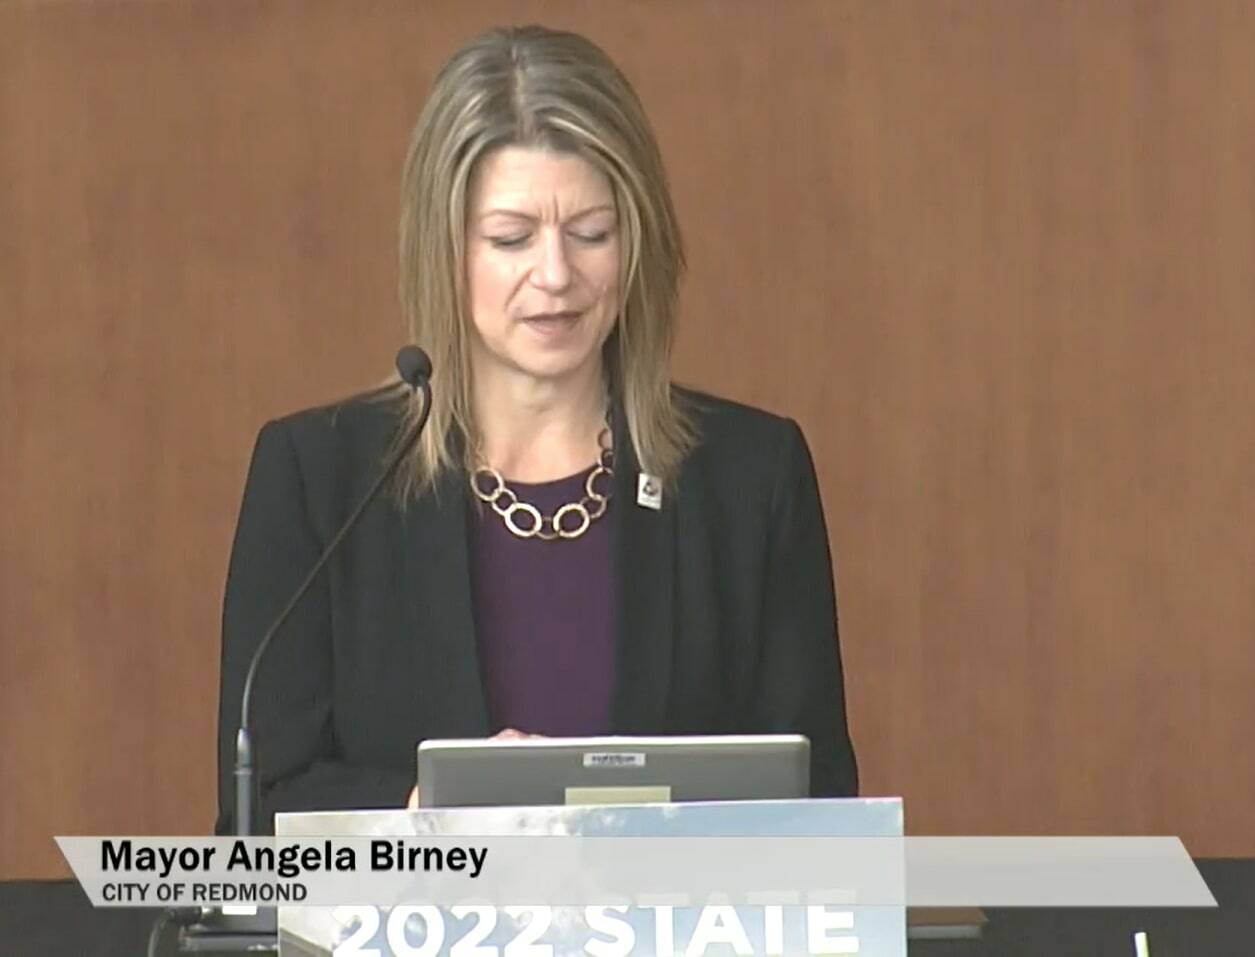 Mayor Angela Birney speaks at Redmond’s State of the City address on March 31. Courtesy of YouTube.